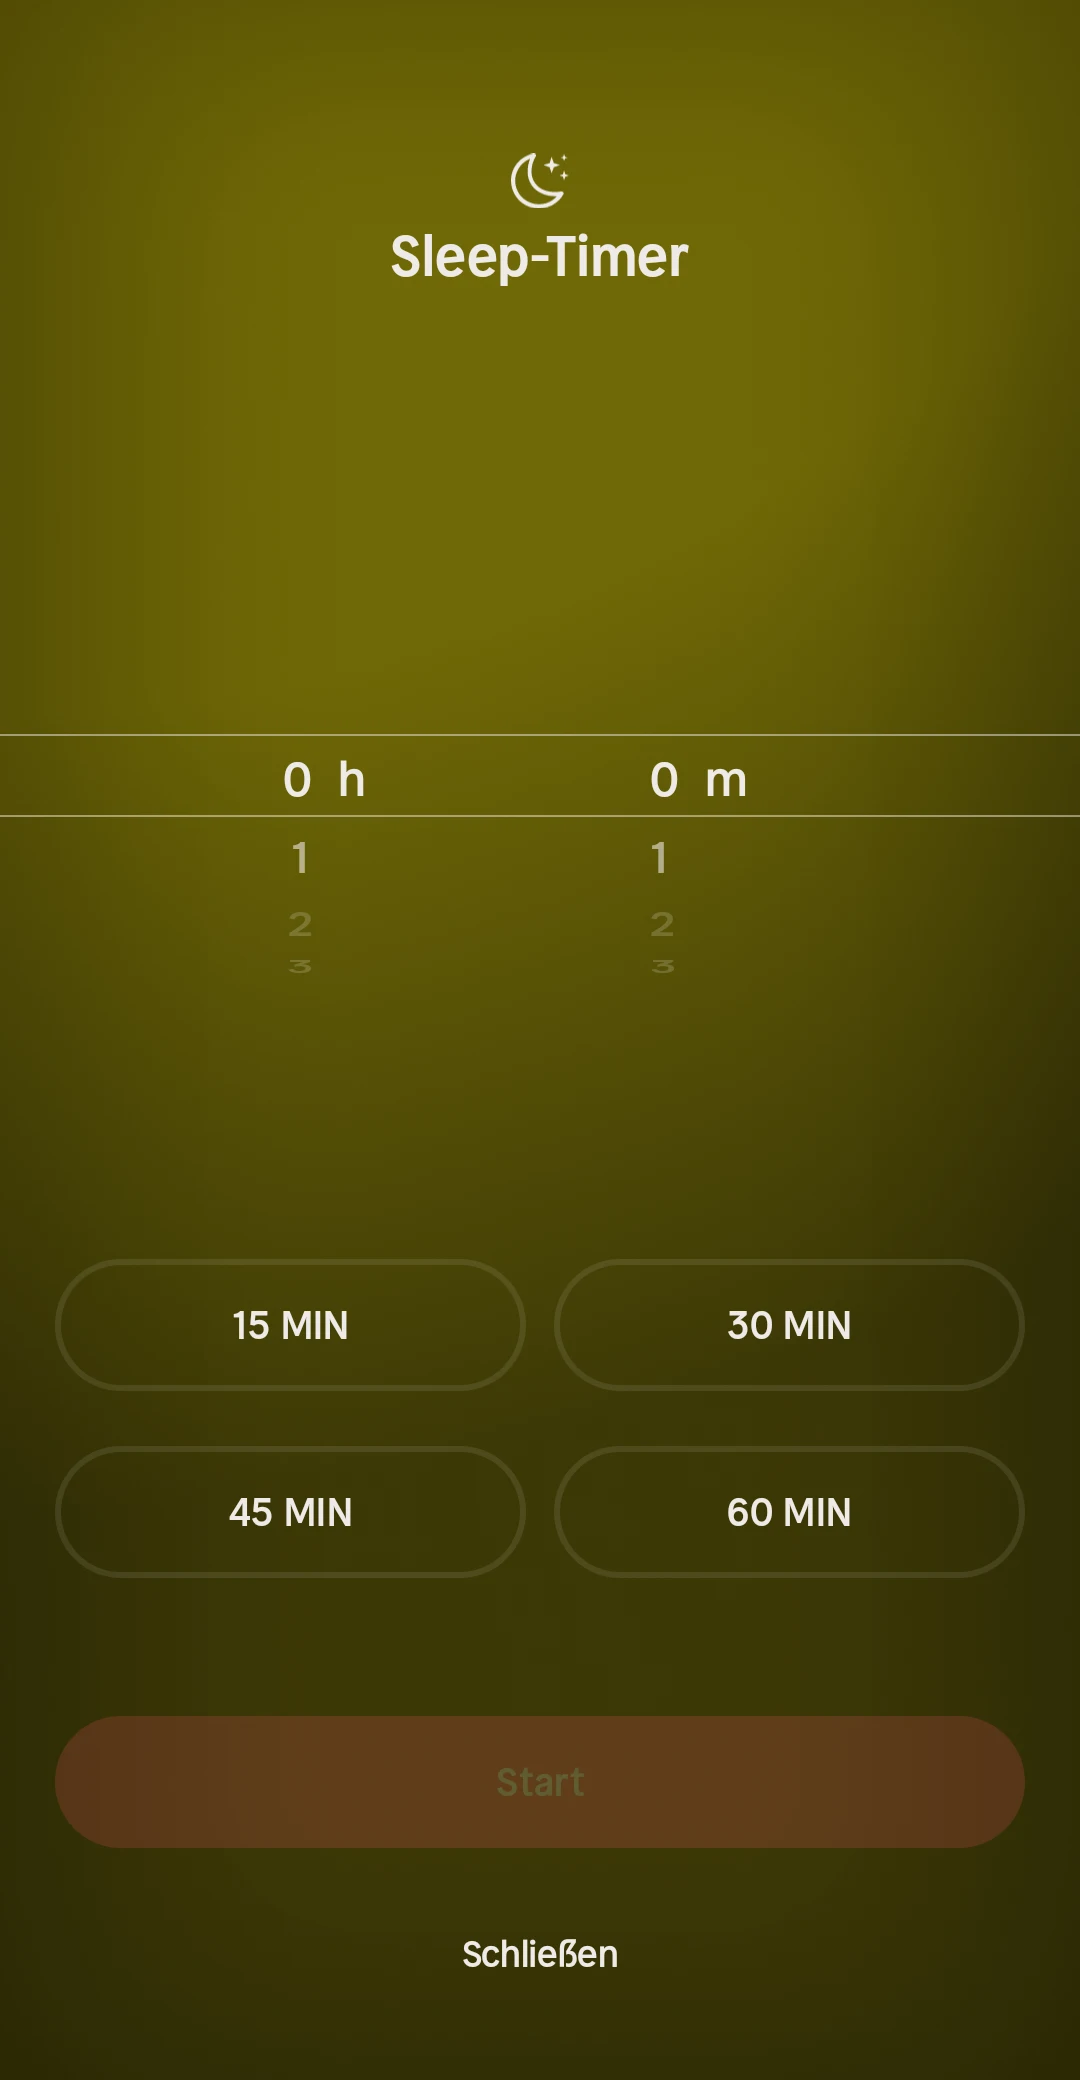 Nextory App: Sleep-Timer / Schlummerfunktion